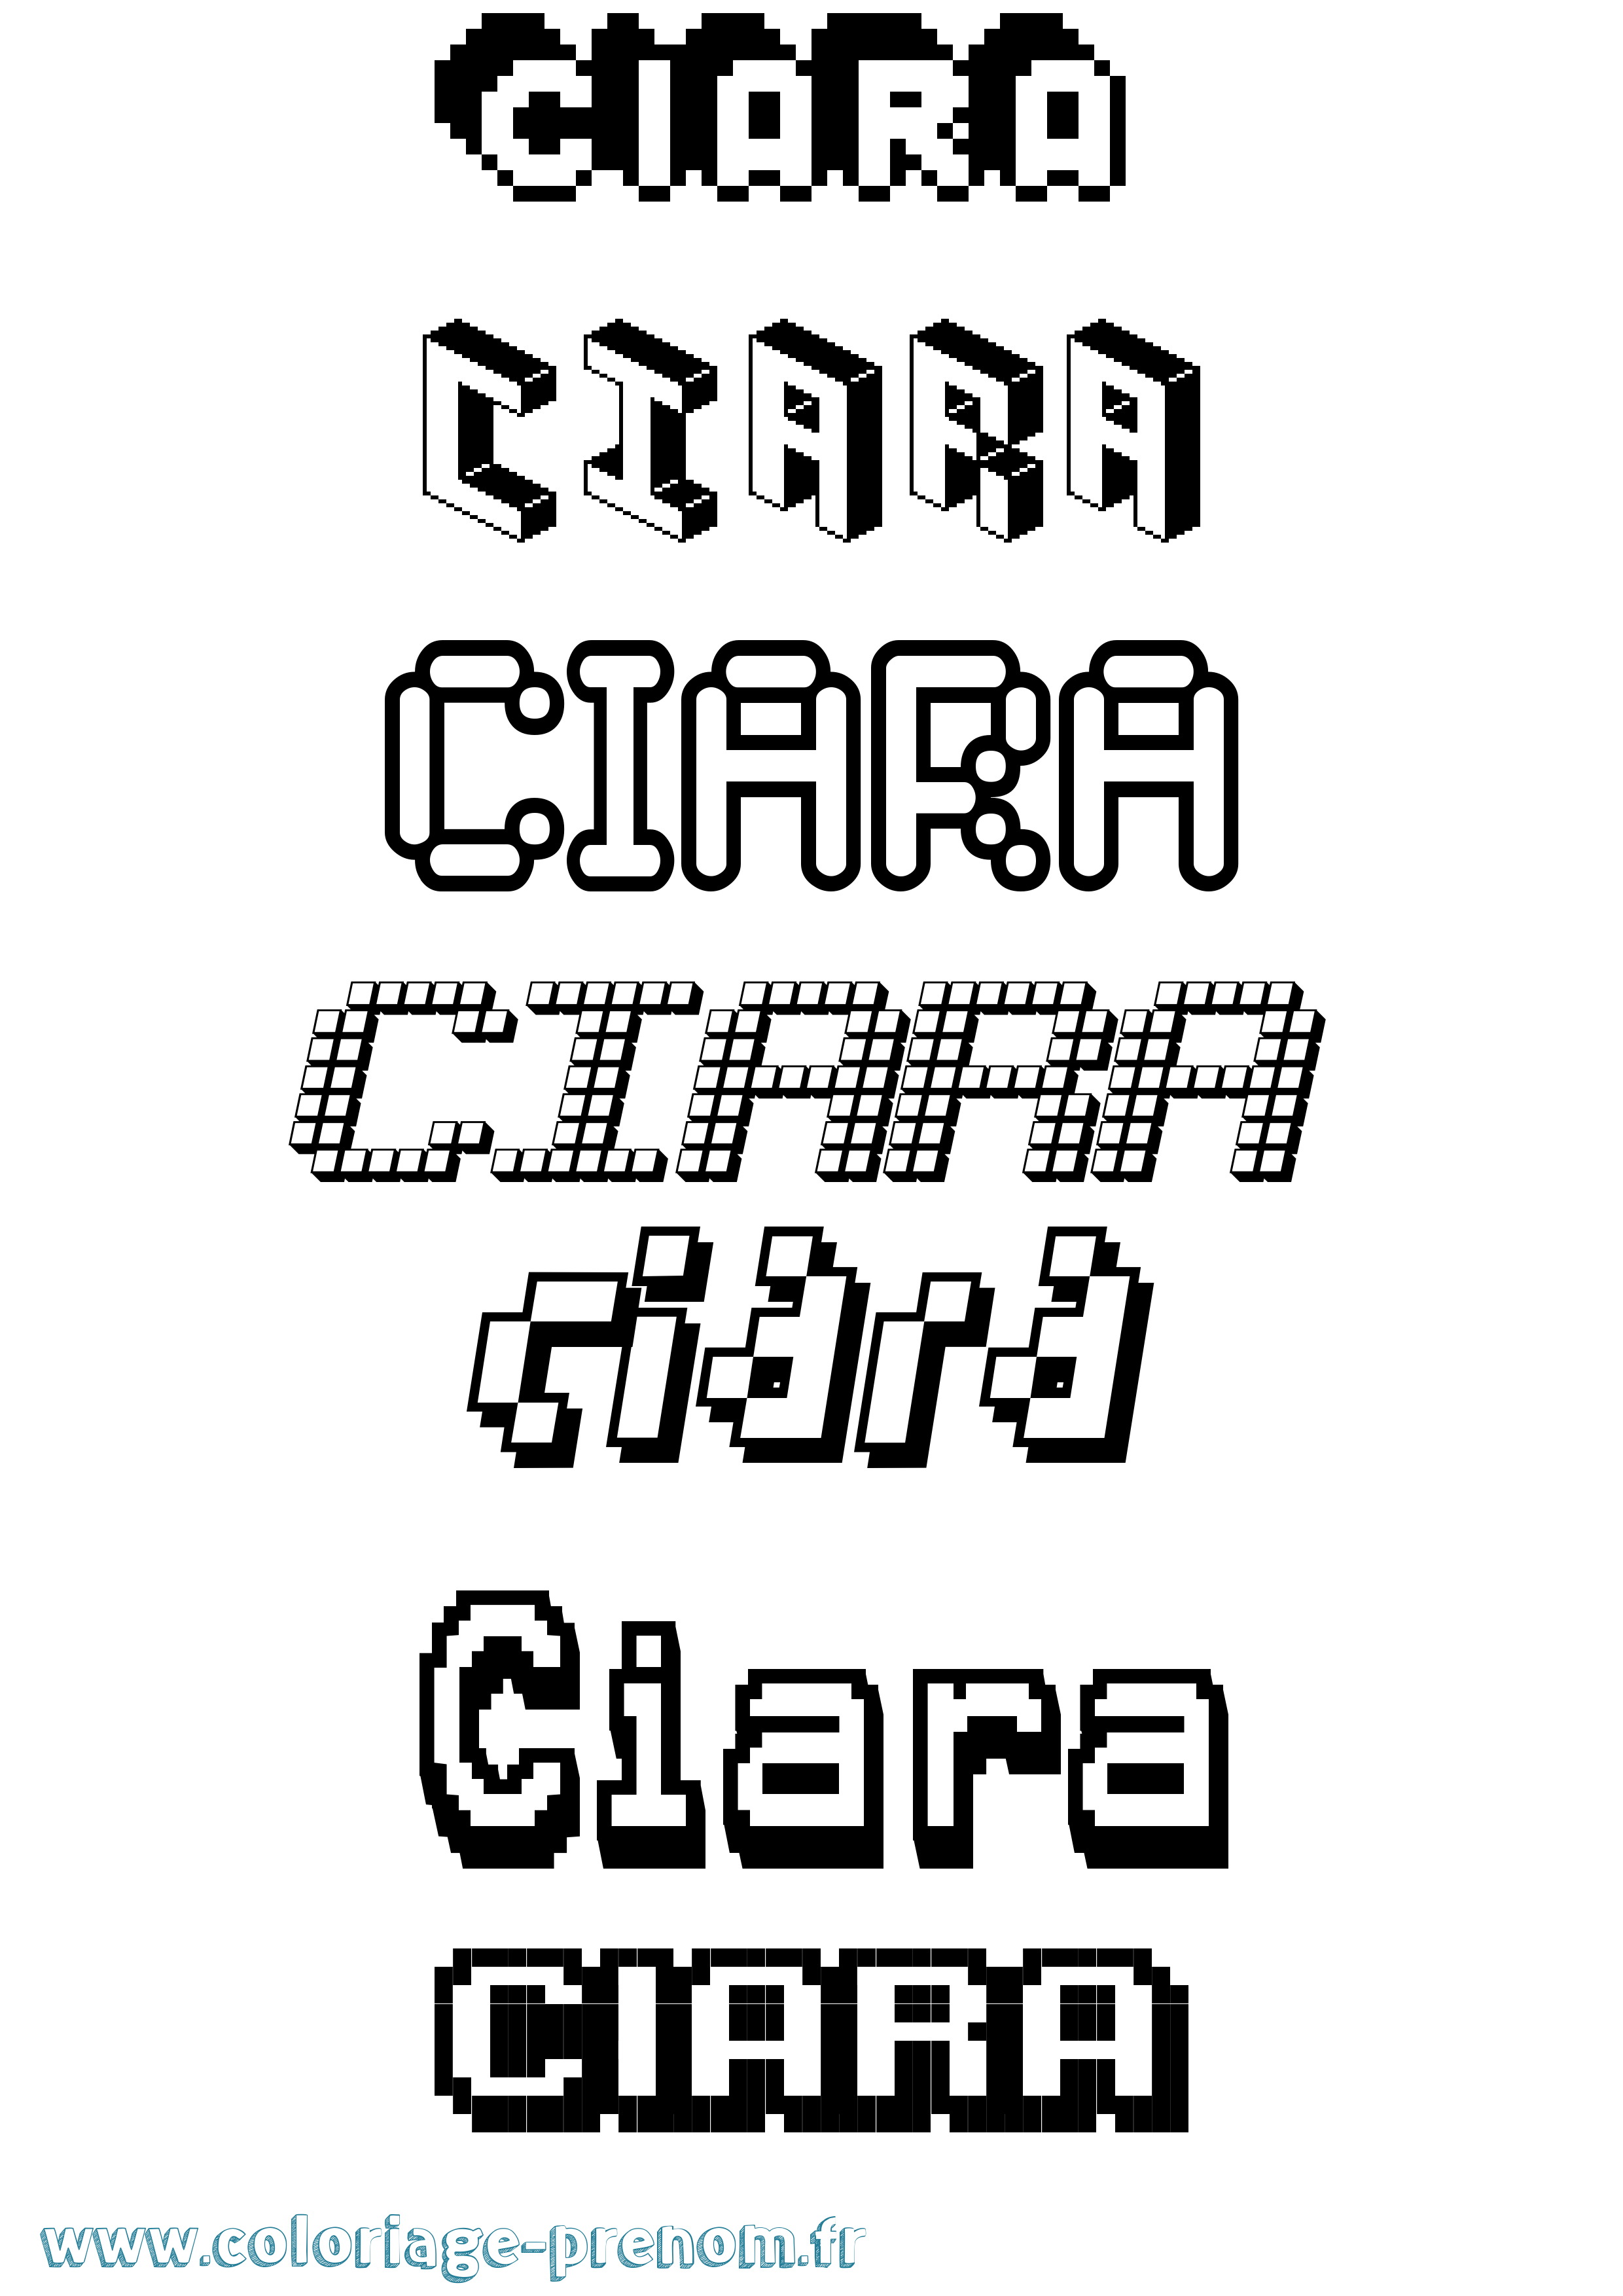 Coloriage prénom Ciara Pixel